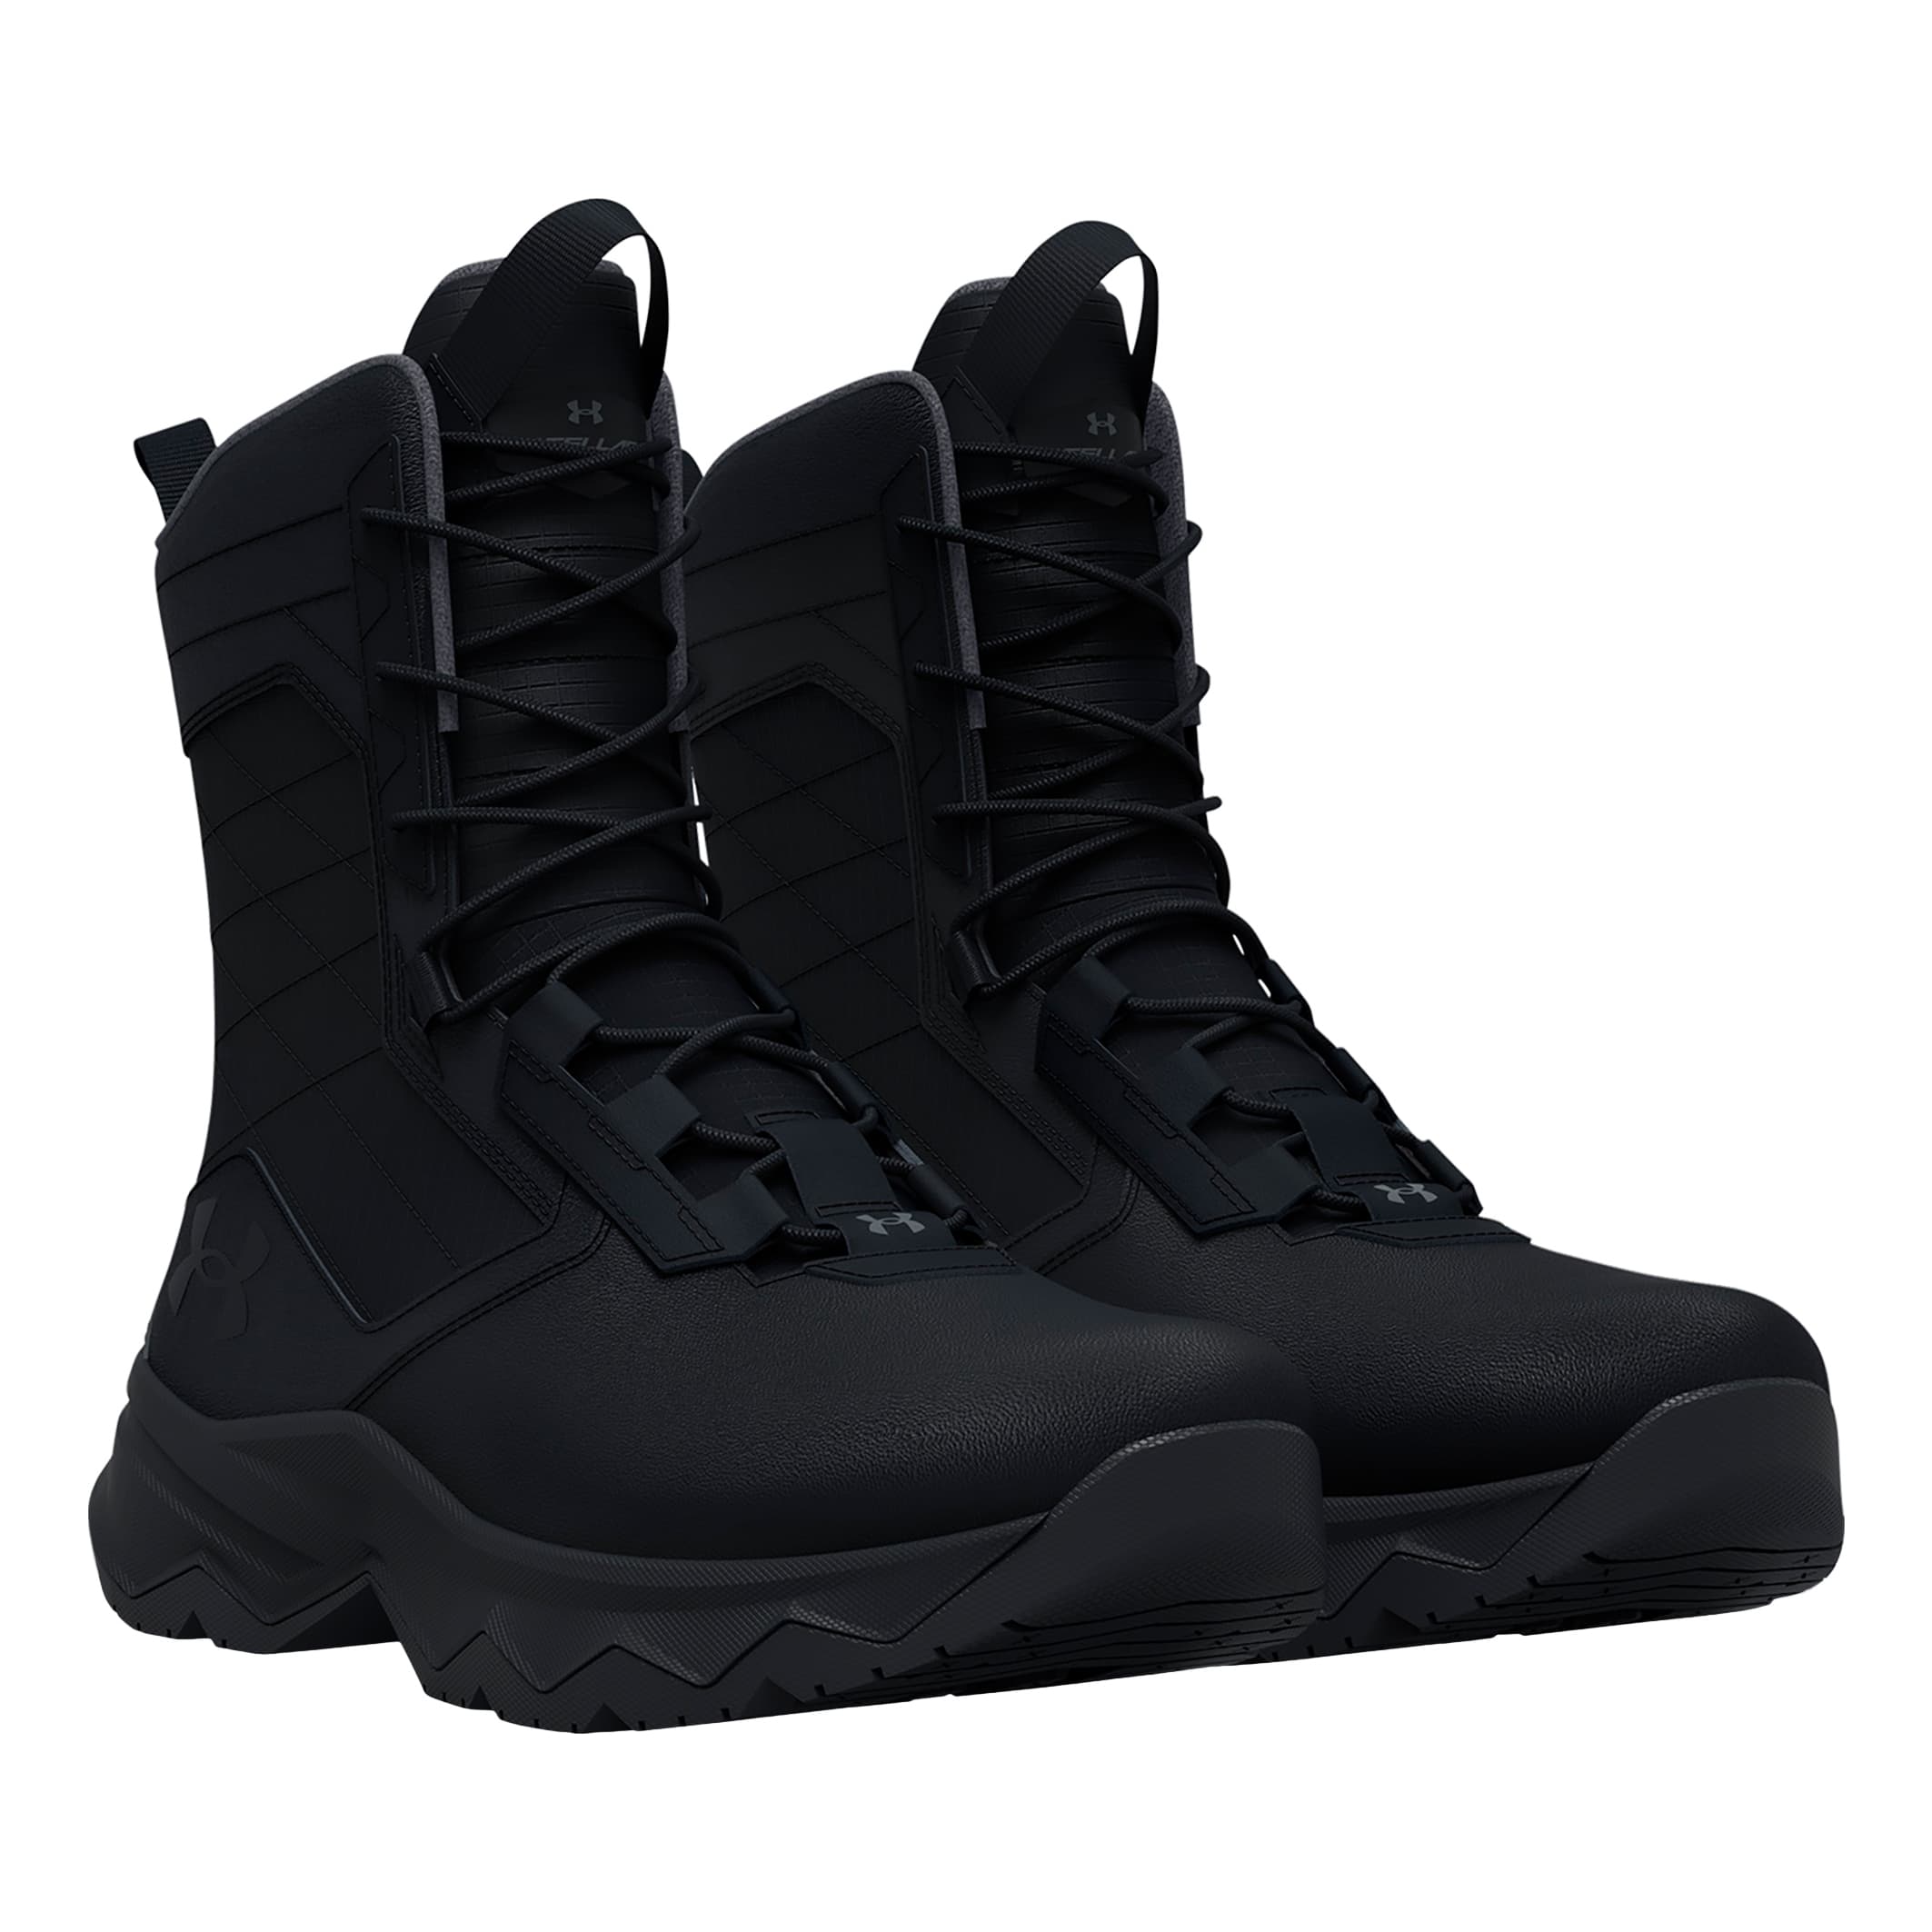 Under Armour® Women’s Stellar G2 Tactical Boots - pair